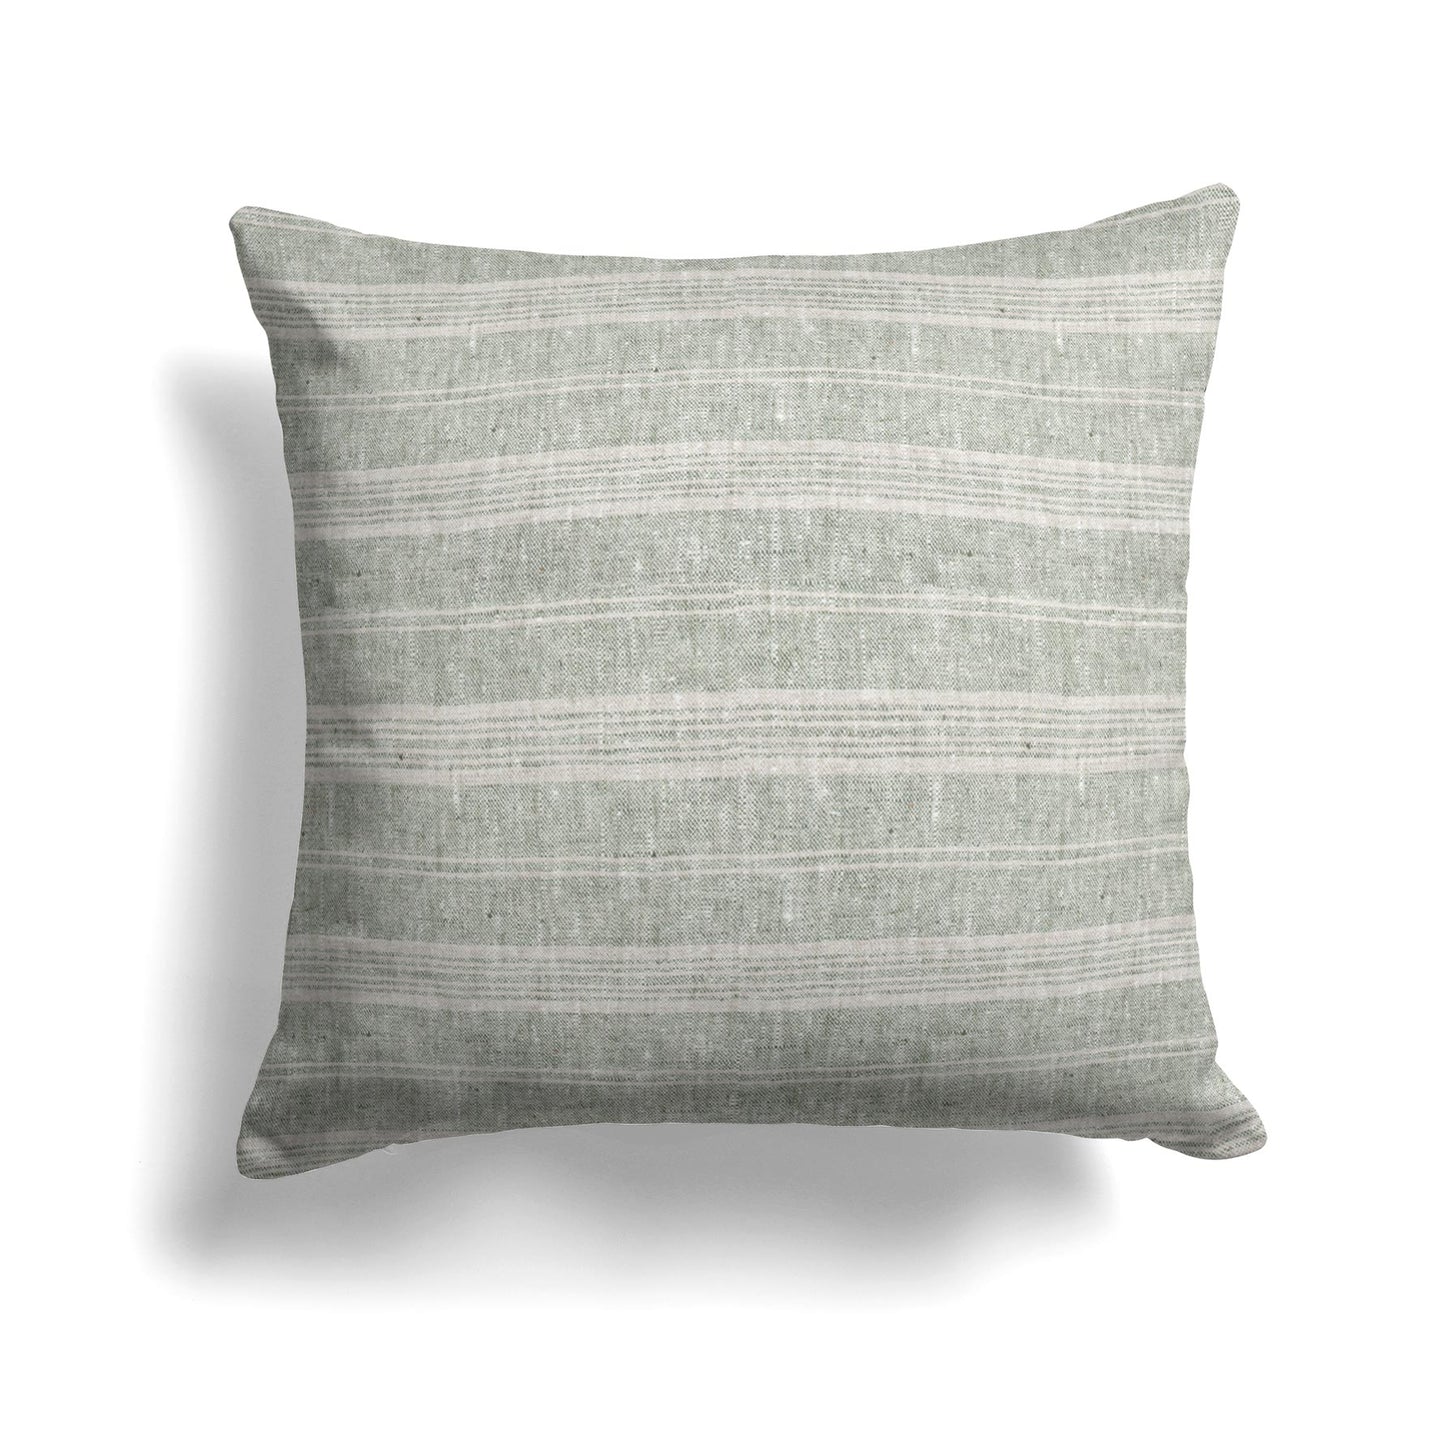 Multistripe Linen Pillow Cover in Green